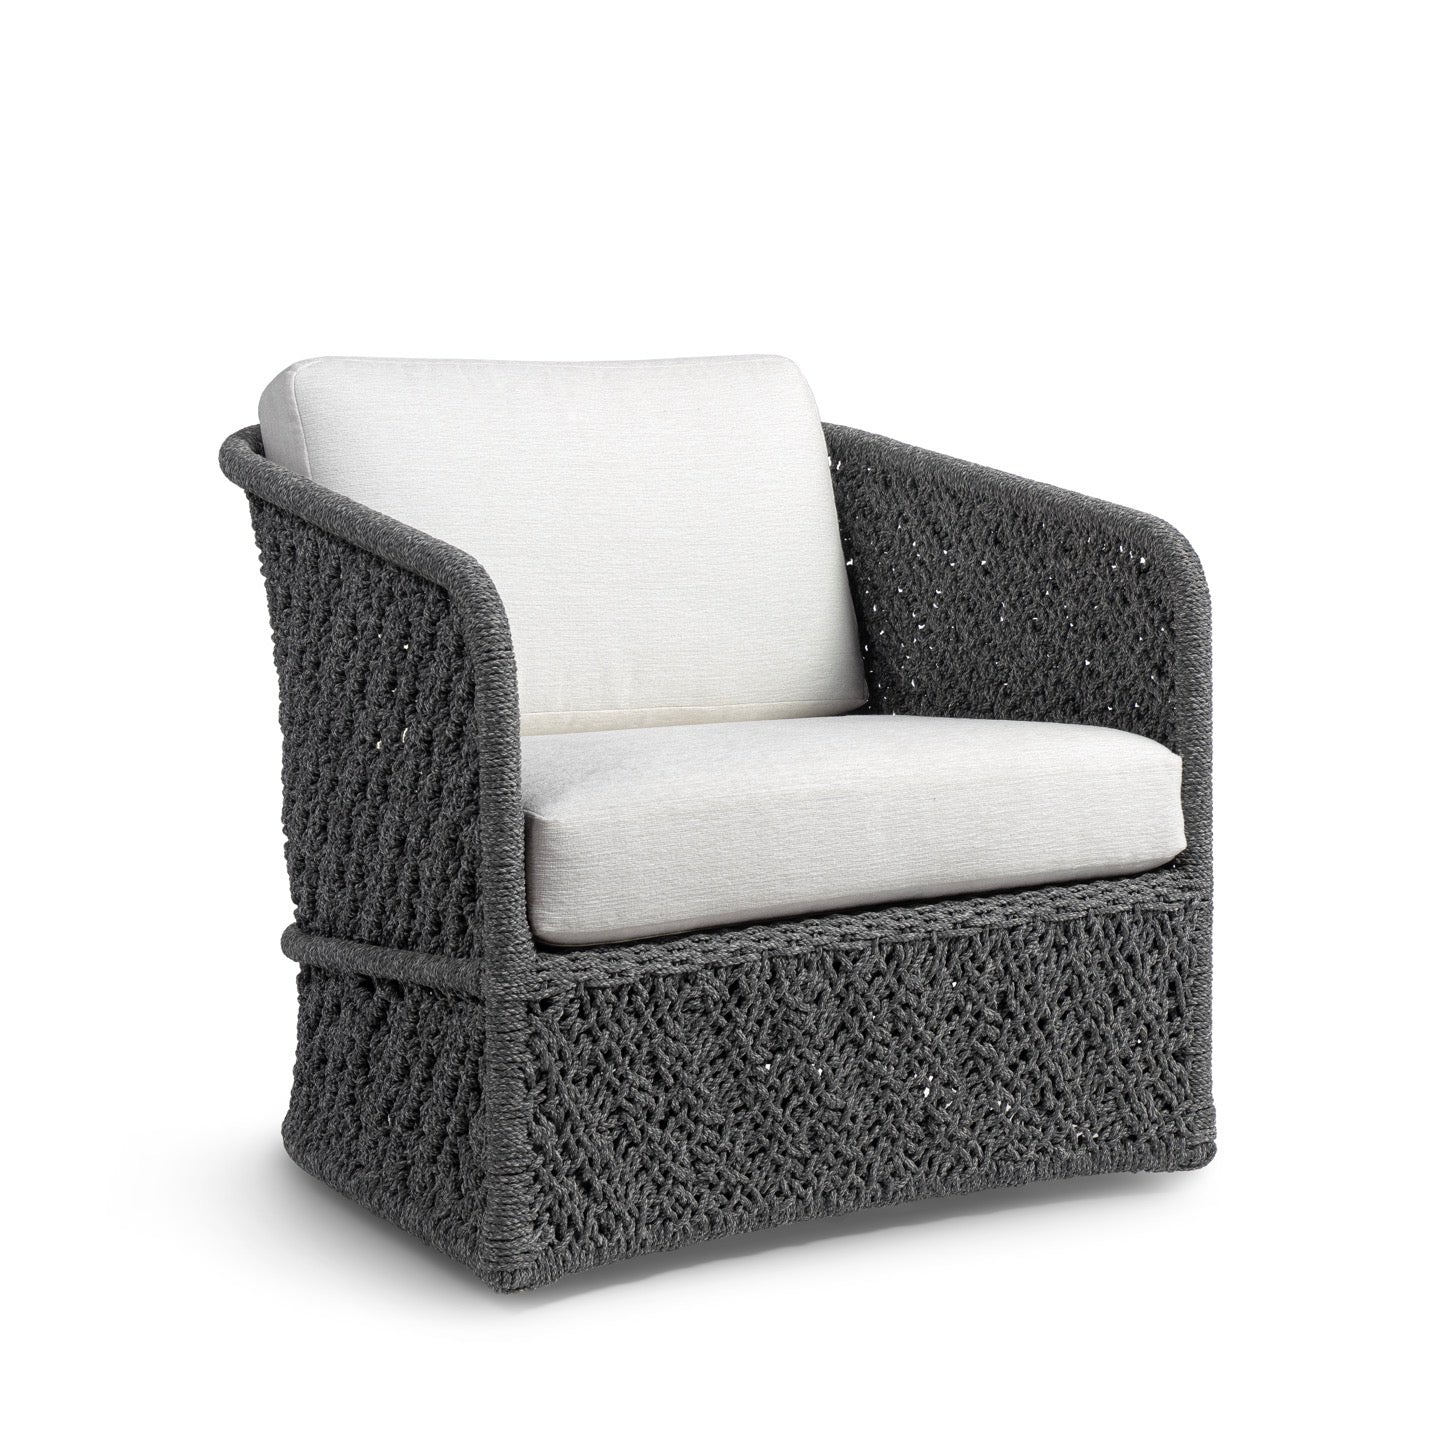 Jenson Outdoor Swivel Lounge Chair Charcoal